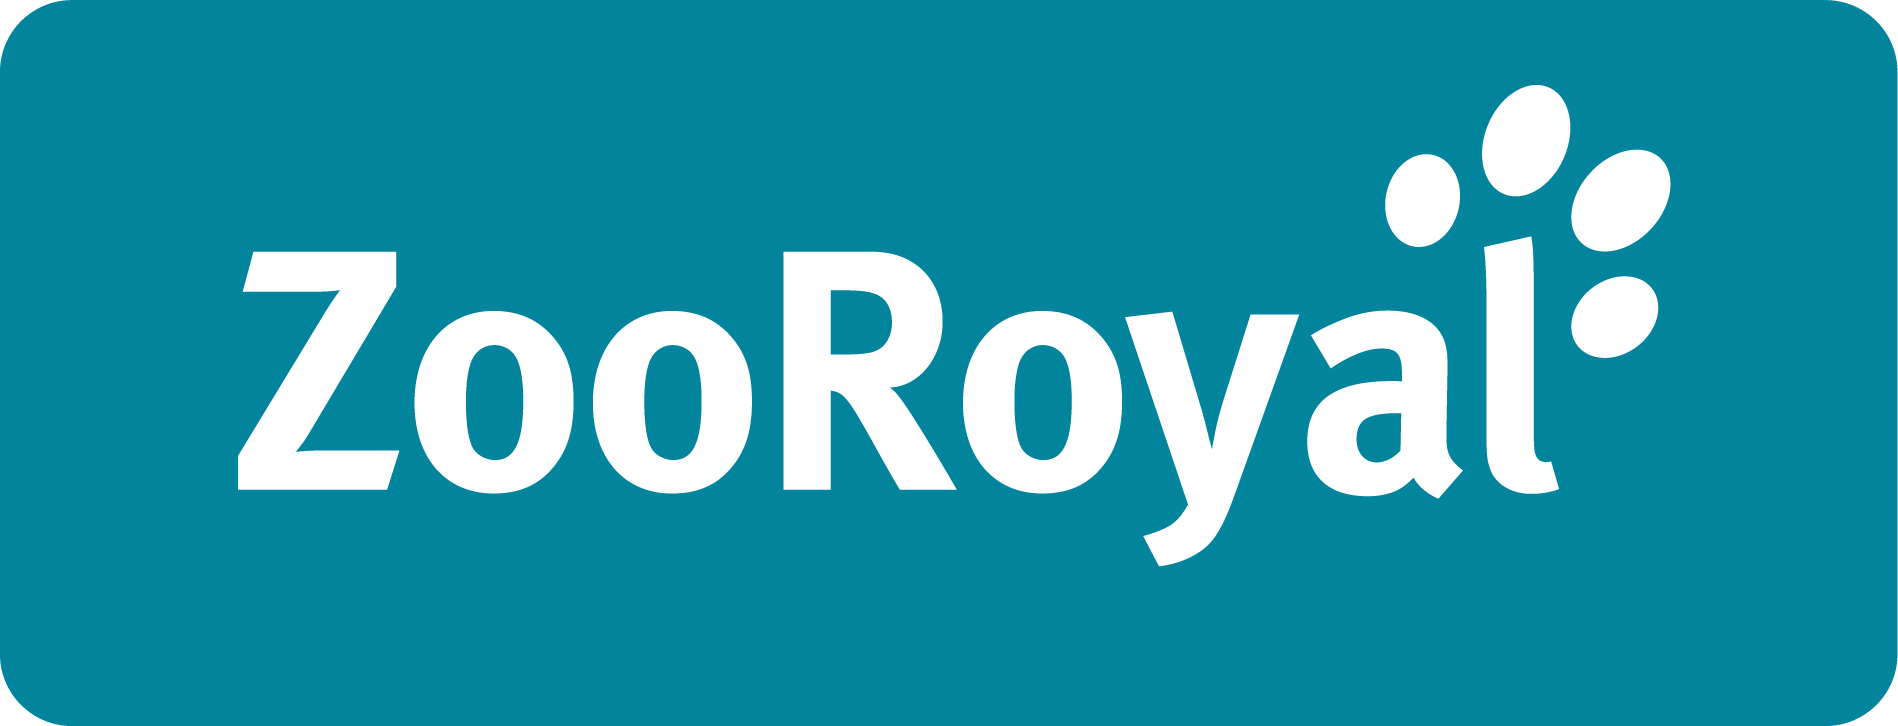 Zoo Royal Logo